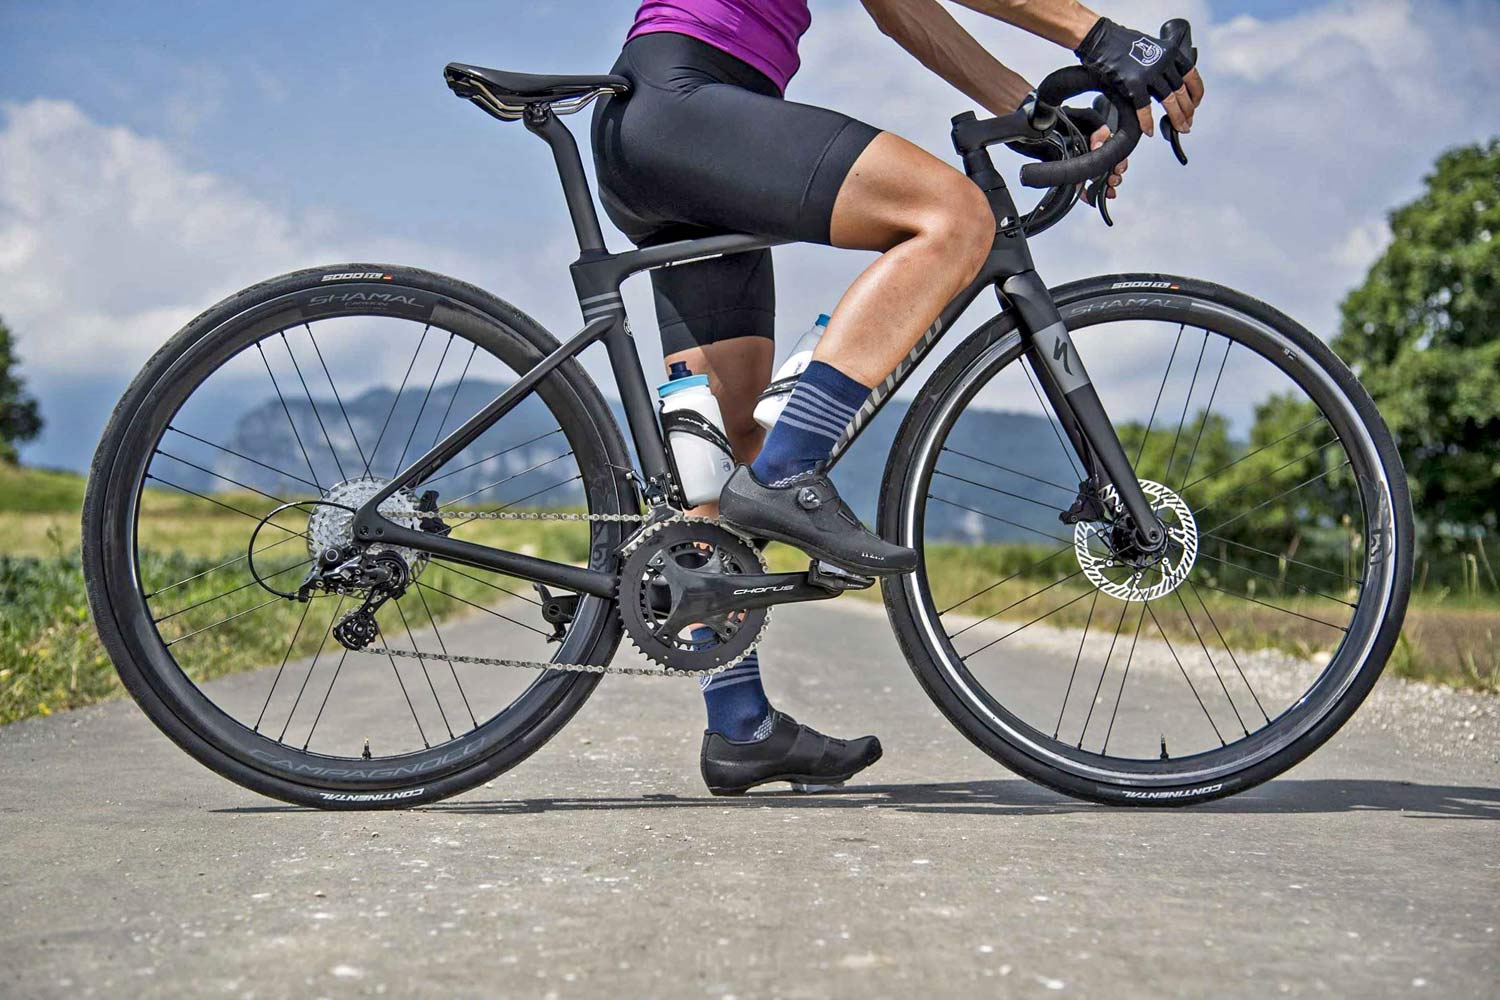 2020 Campagnolo Shamal Carbon DB wheels, 21mm wide internal Italian lightweight endurance gravel all-road bike wheelset